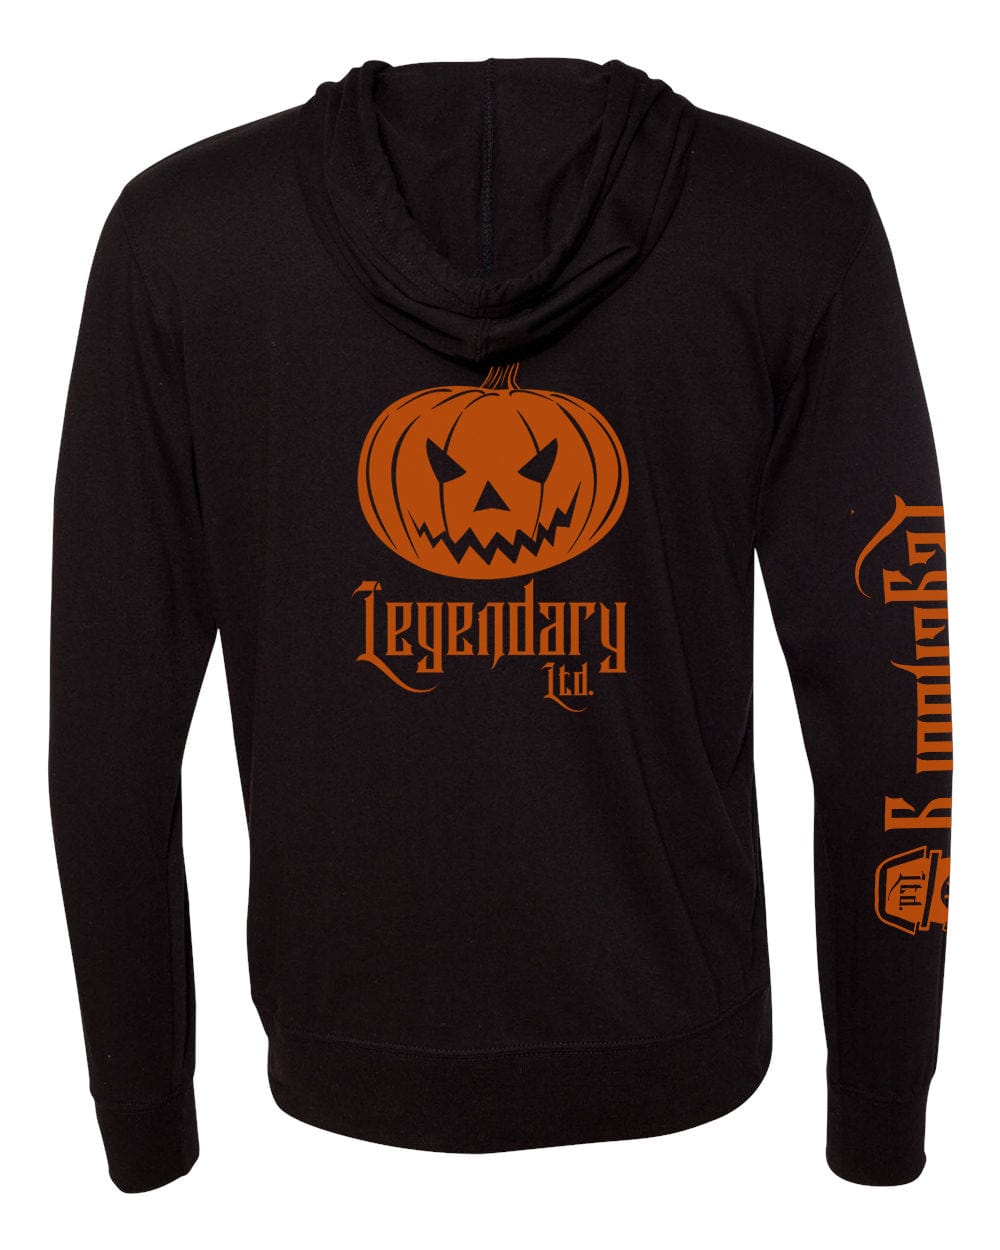 Legendary ltd. hoodie Lightweight Halloween Pumpkin Hoodie